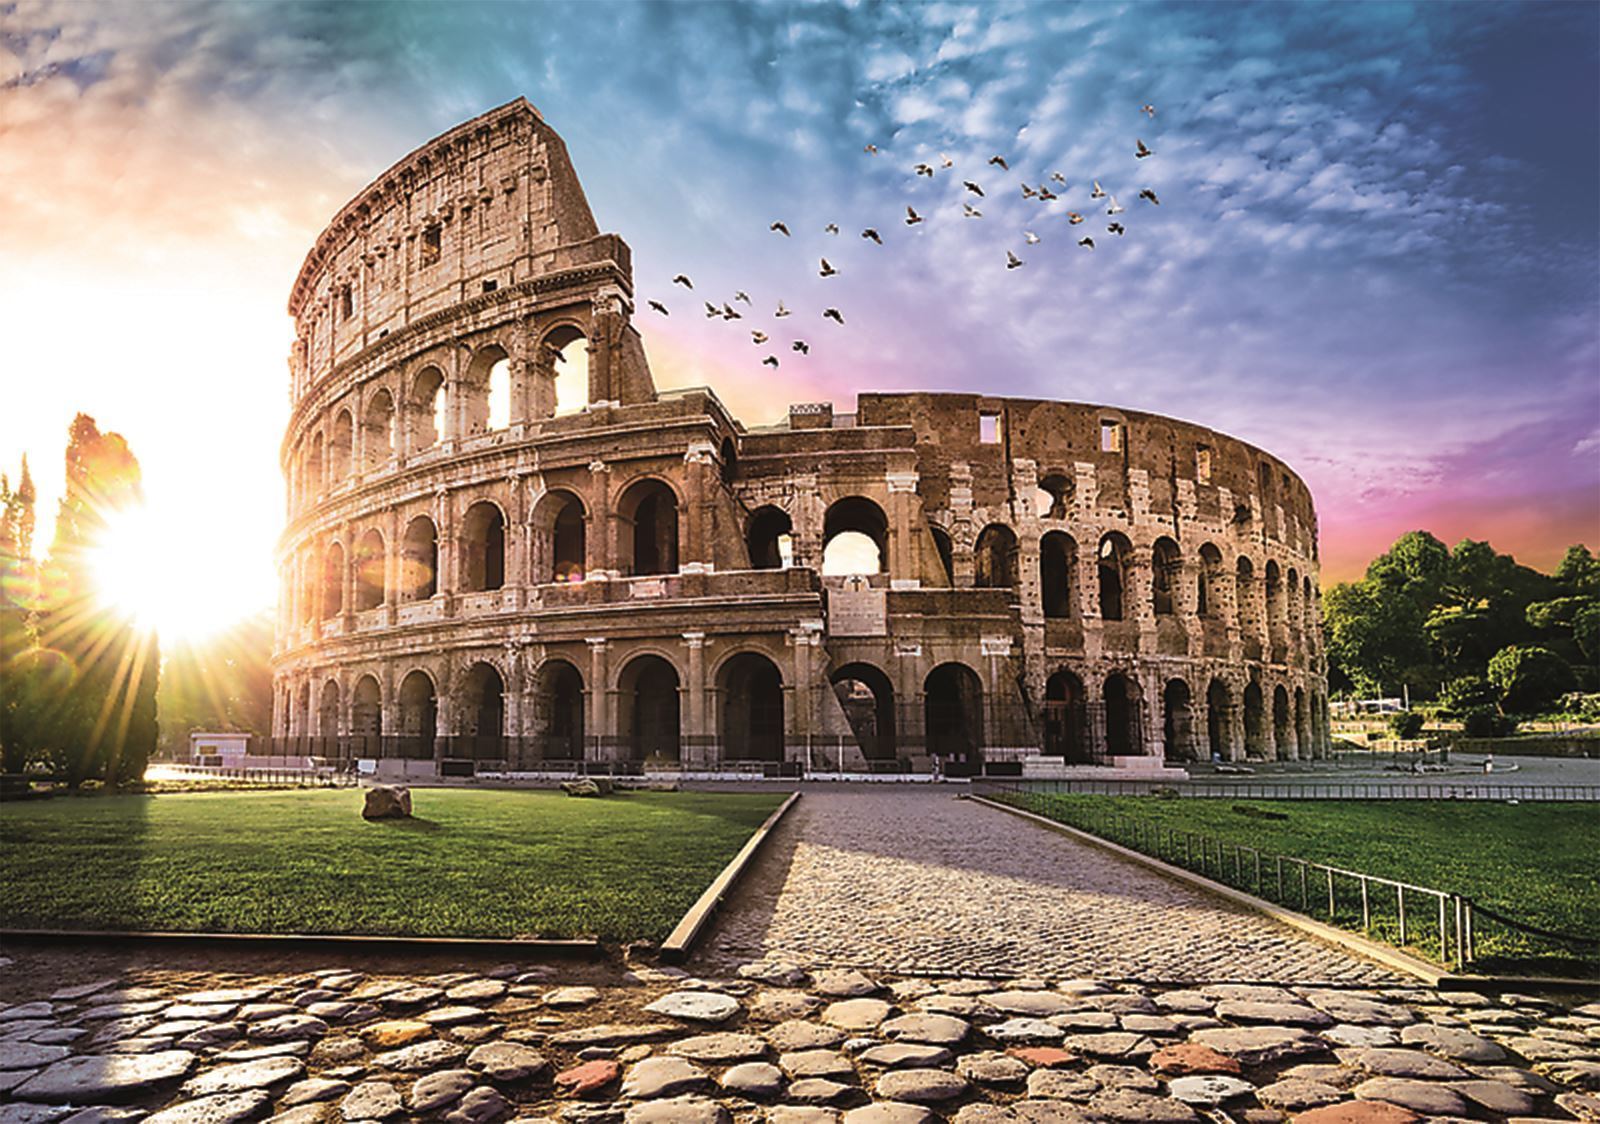 Trefl 1000 Piece Panorama Adult Rome Colosseum Theatre Large Floor Jigsaw Puzzle 